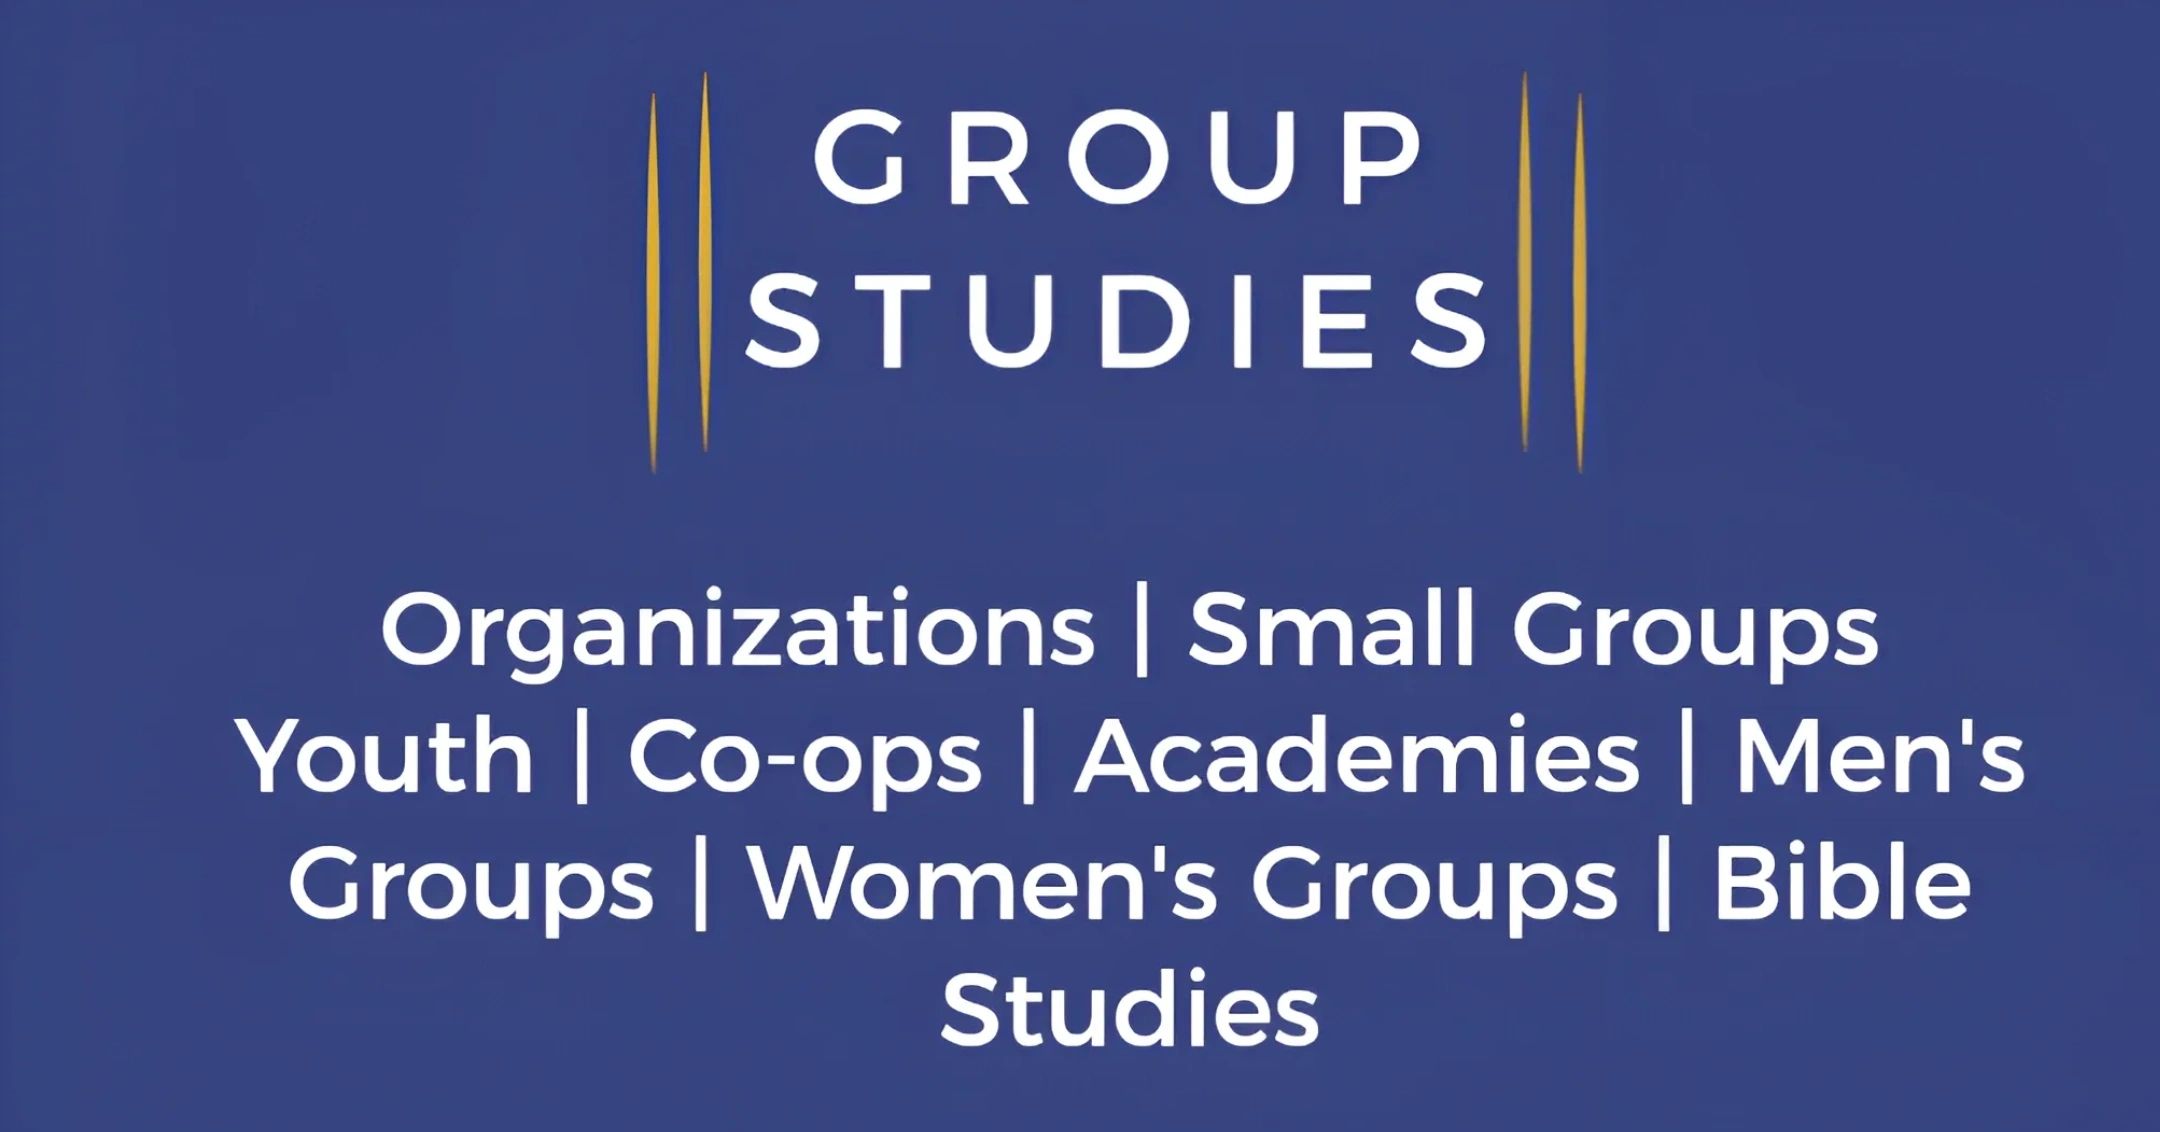 #GroupStudies #PersonalDevelopment #organizationaldevelopment #continuingeducation #ContinuingEd